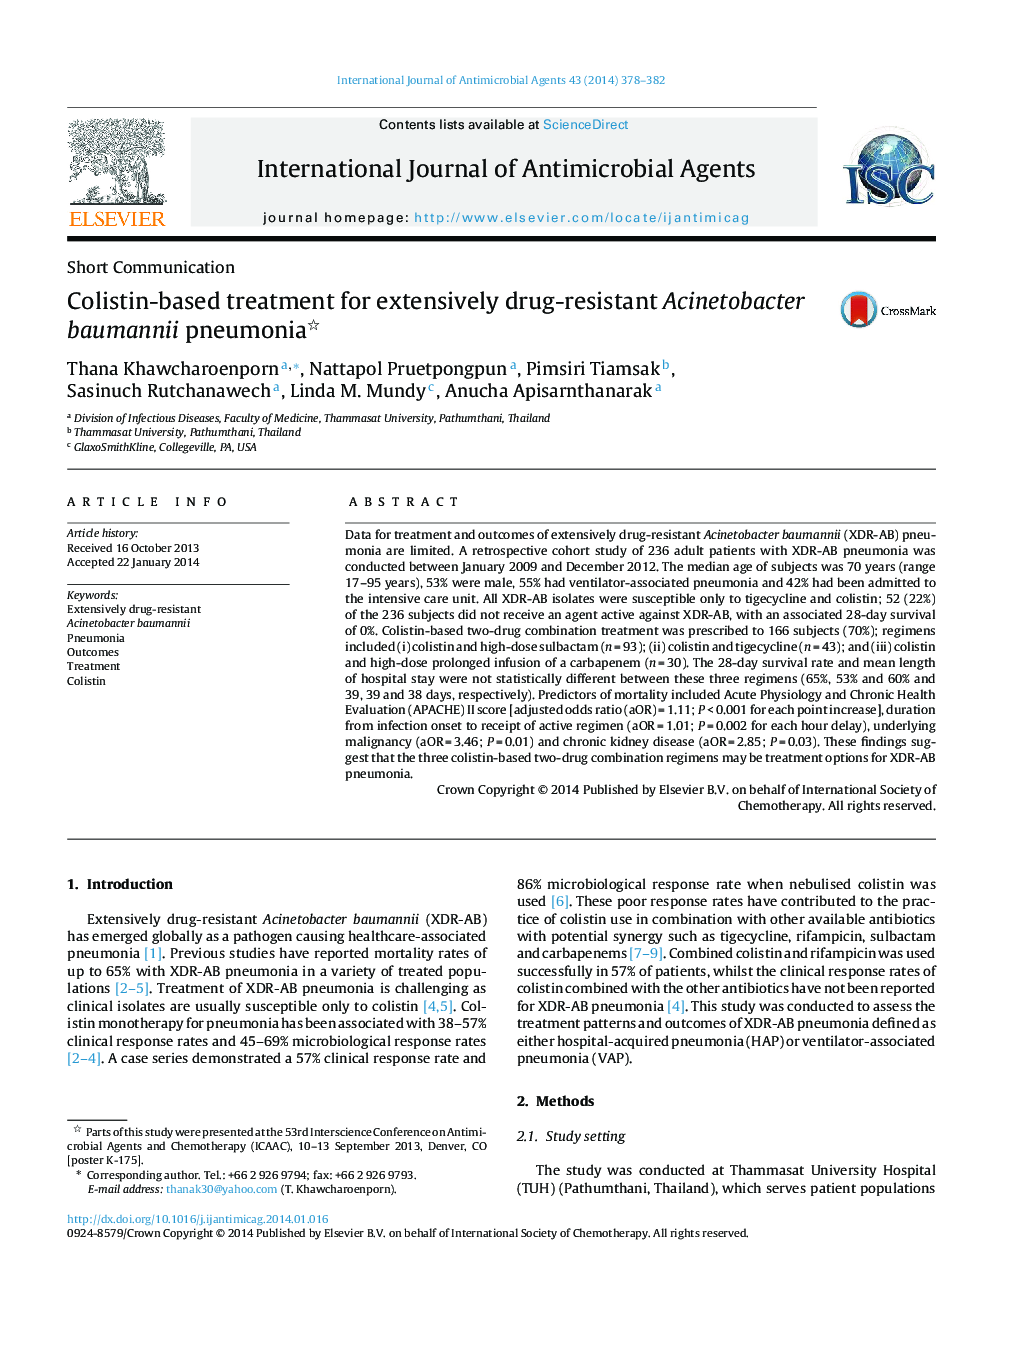 Colistin-based treatment for extensively drug-resistant Acinetobacter baumannii pneumonia